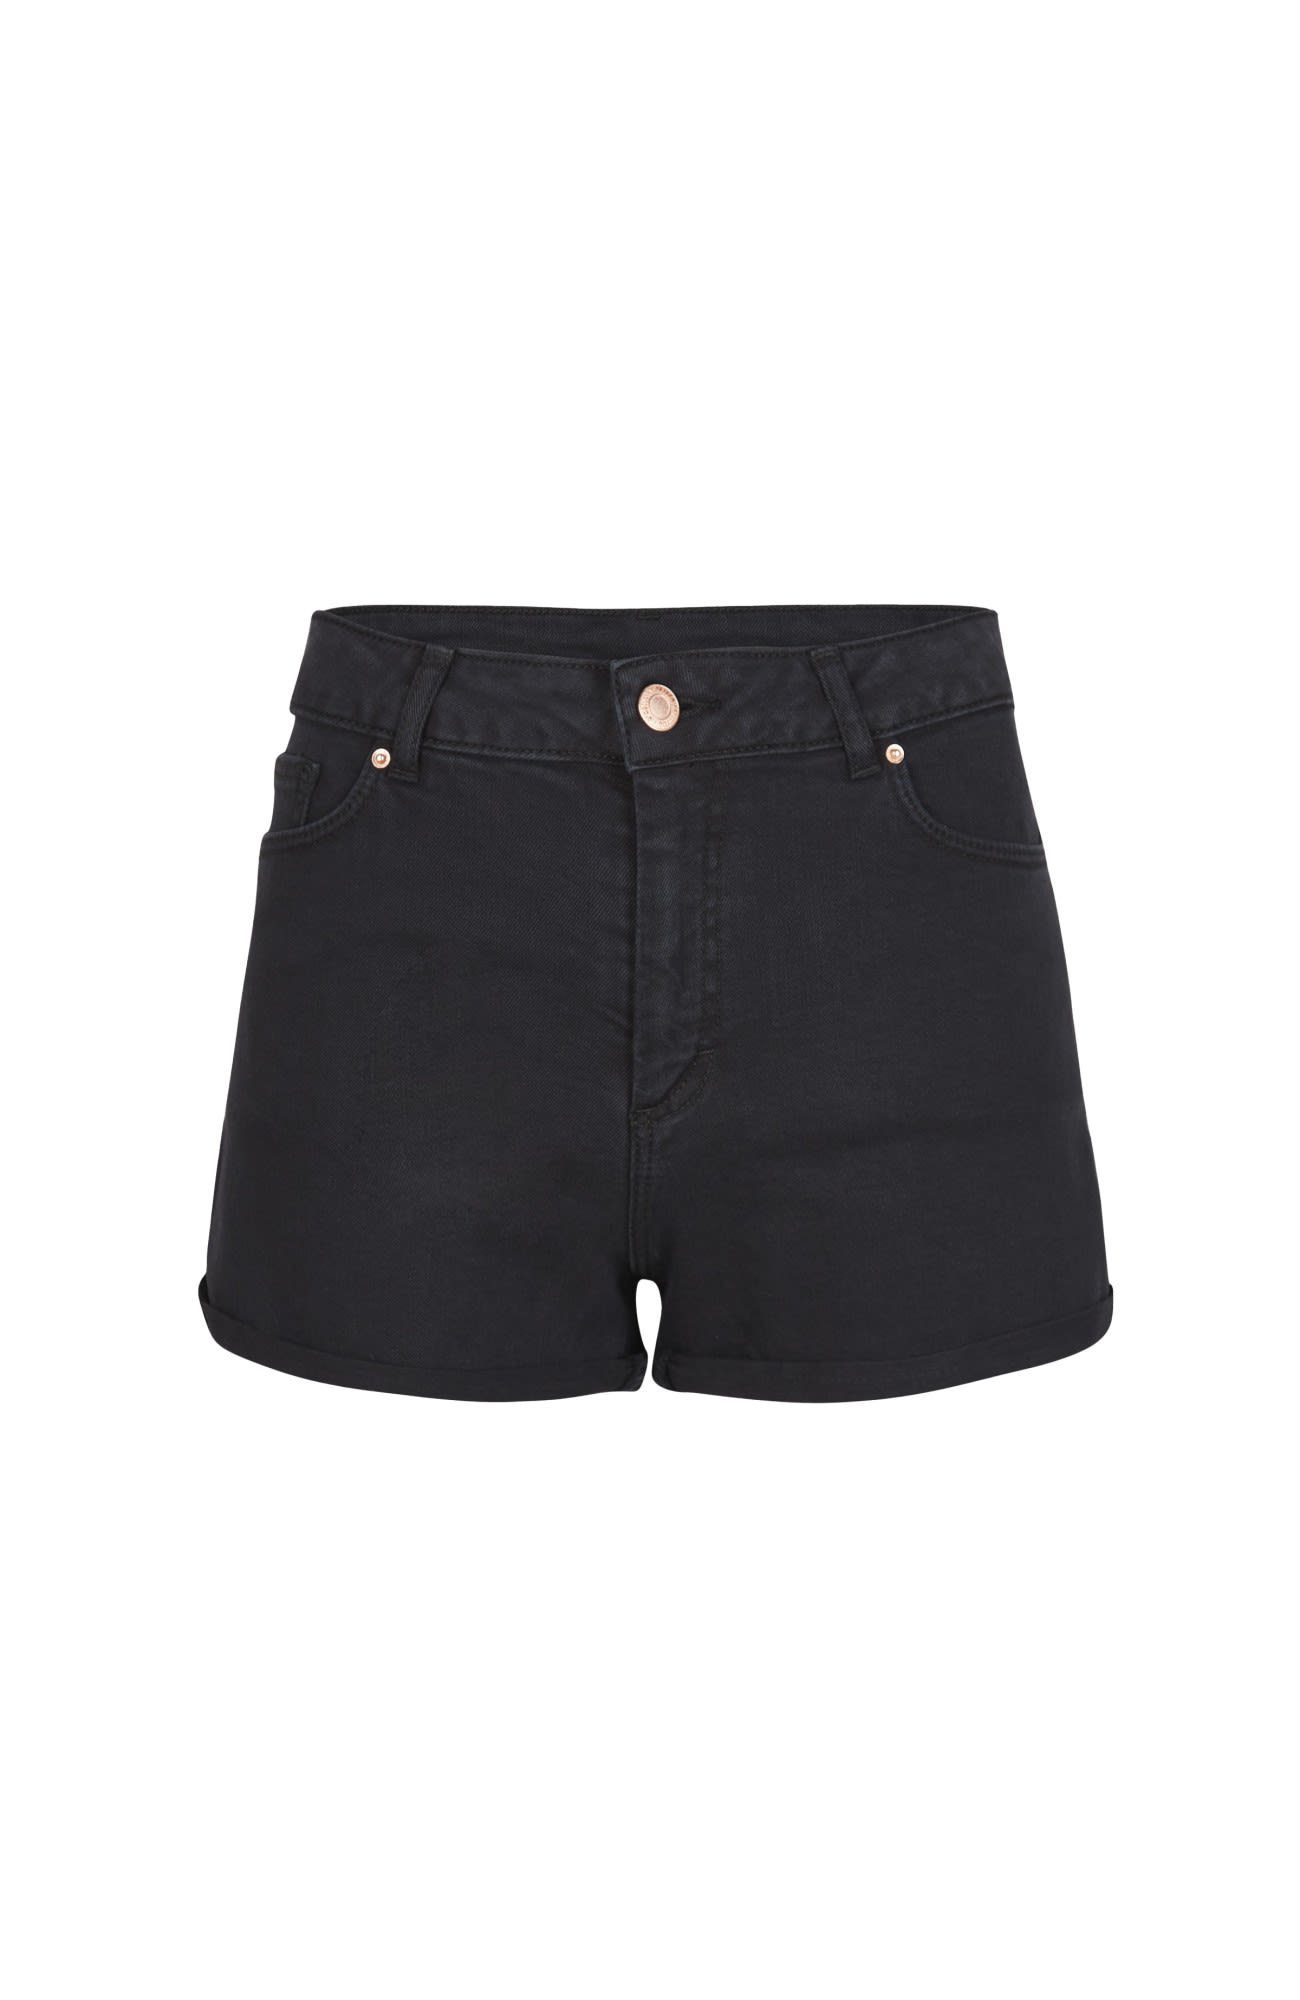 Pkt O'Neill Out Damen Stretch Shorts Essential Black W 5 Strandshorts Oneill